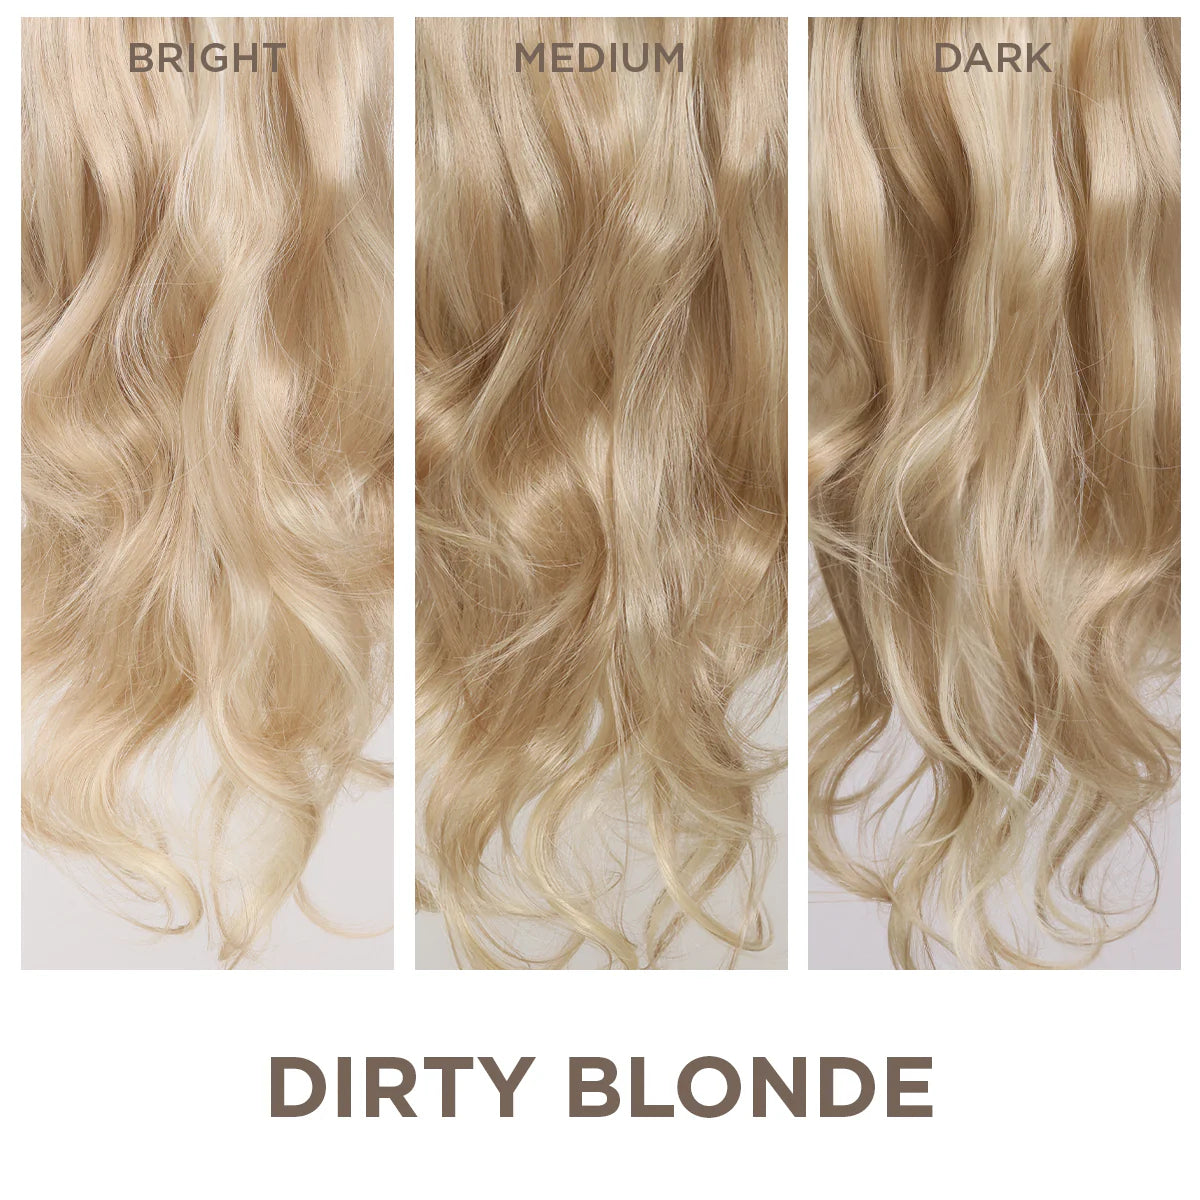 Dirty Blonde + 1 FREE HALO